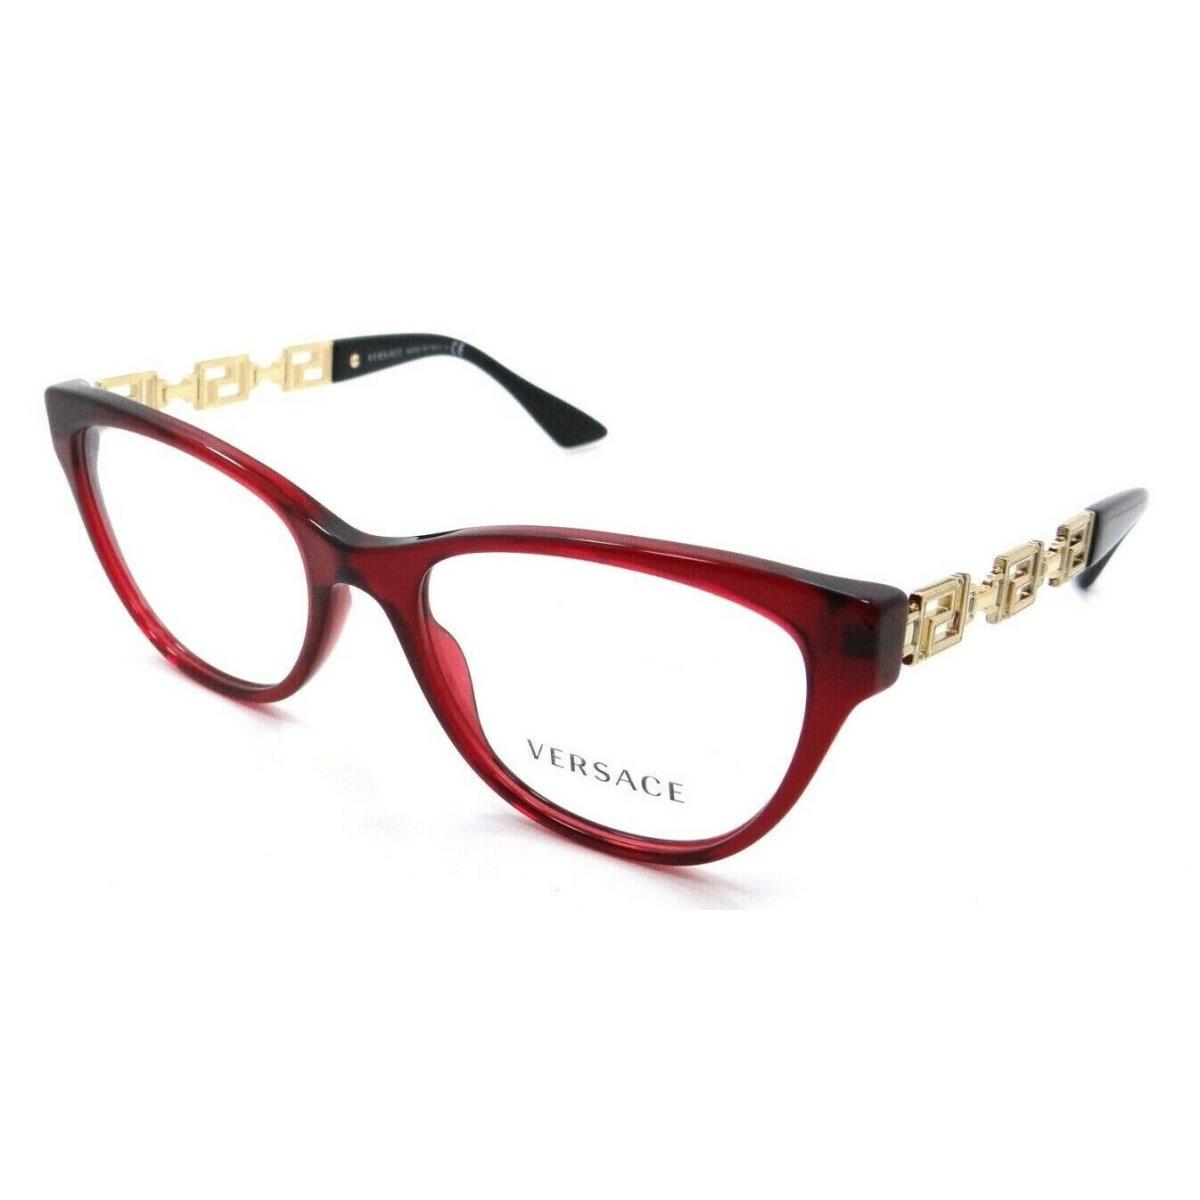 Versace Eyeglasses Frames VE 3292 388 52-18-140 Bordeaux Transparent Italy